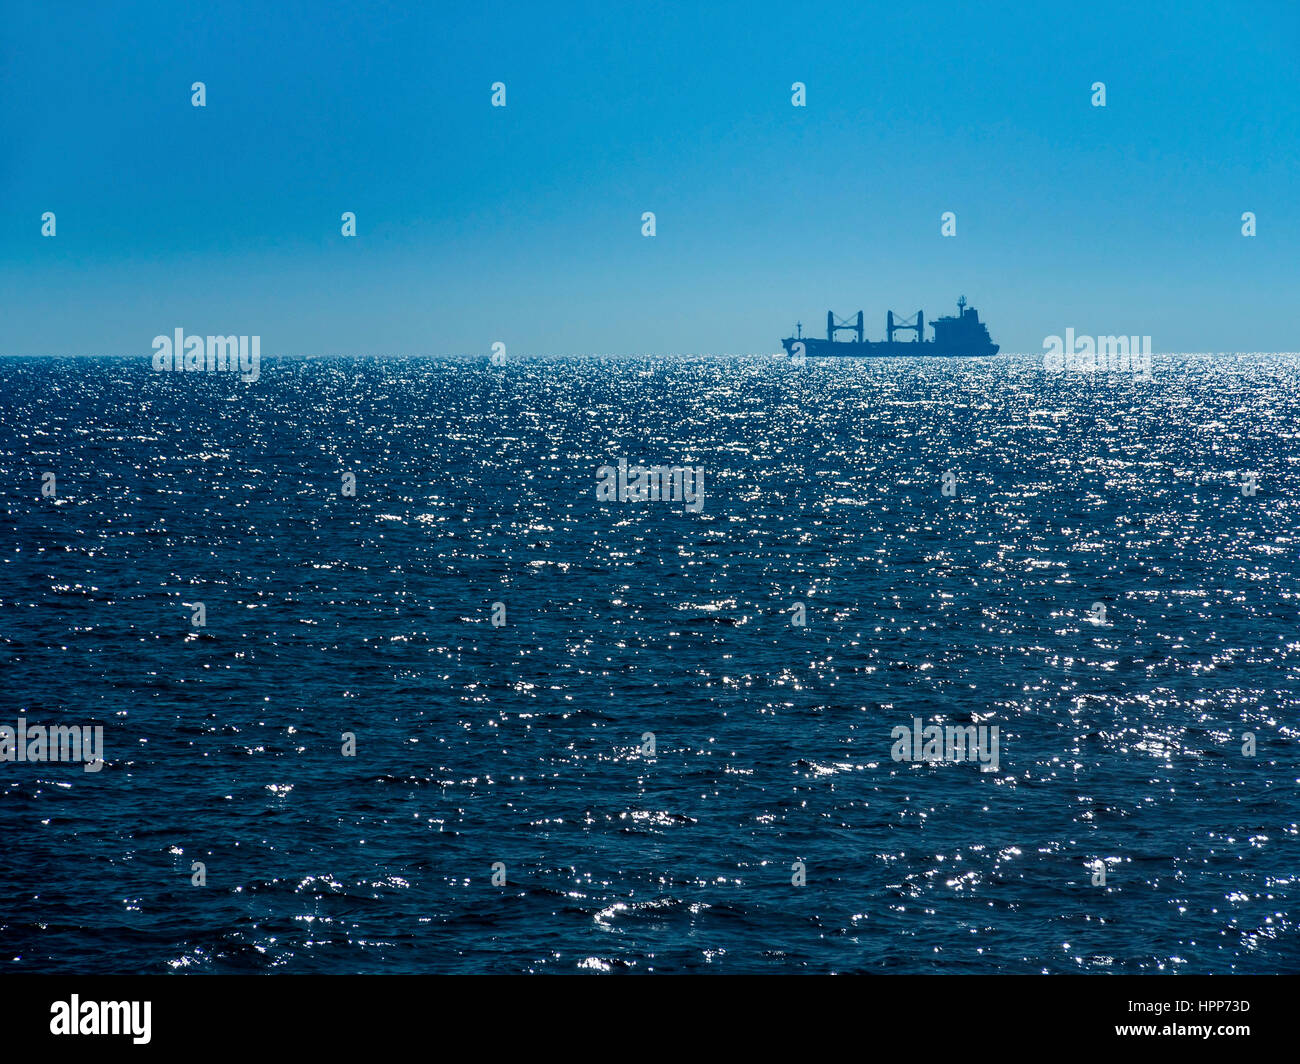 Italy, Sicily, cargo ship on the ocean Stock Photo